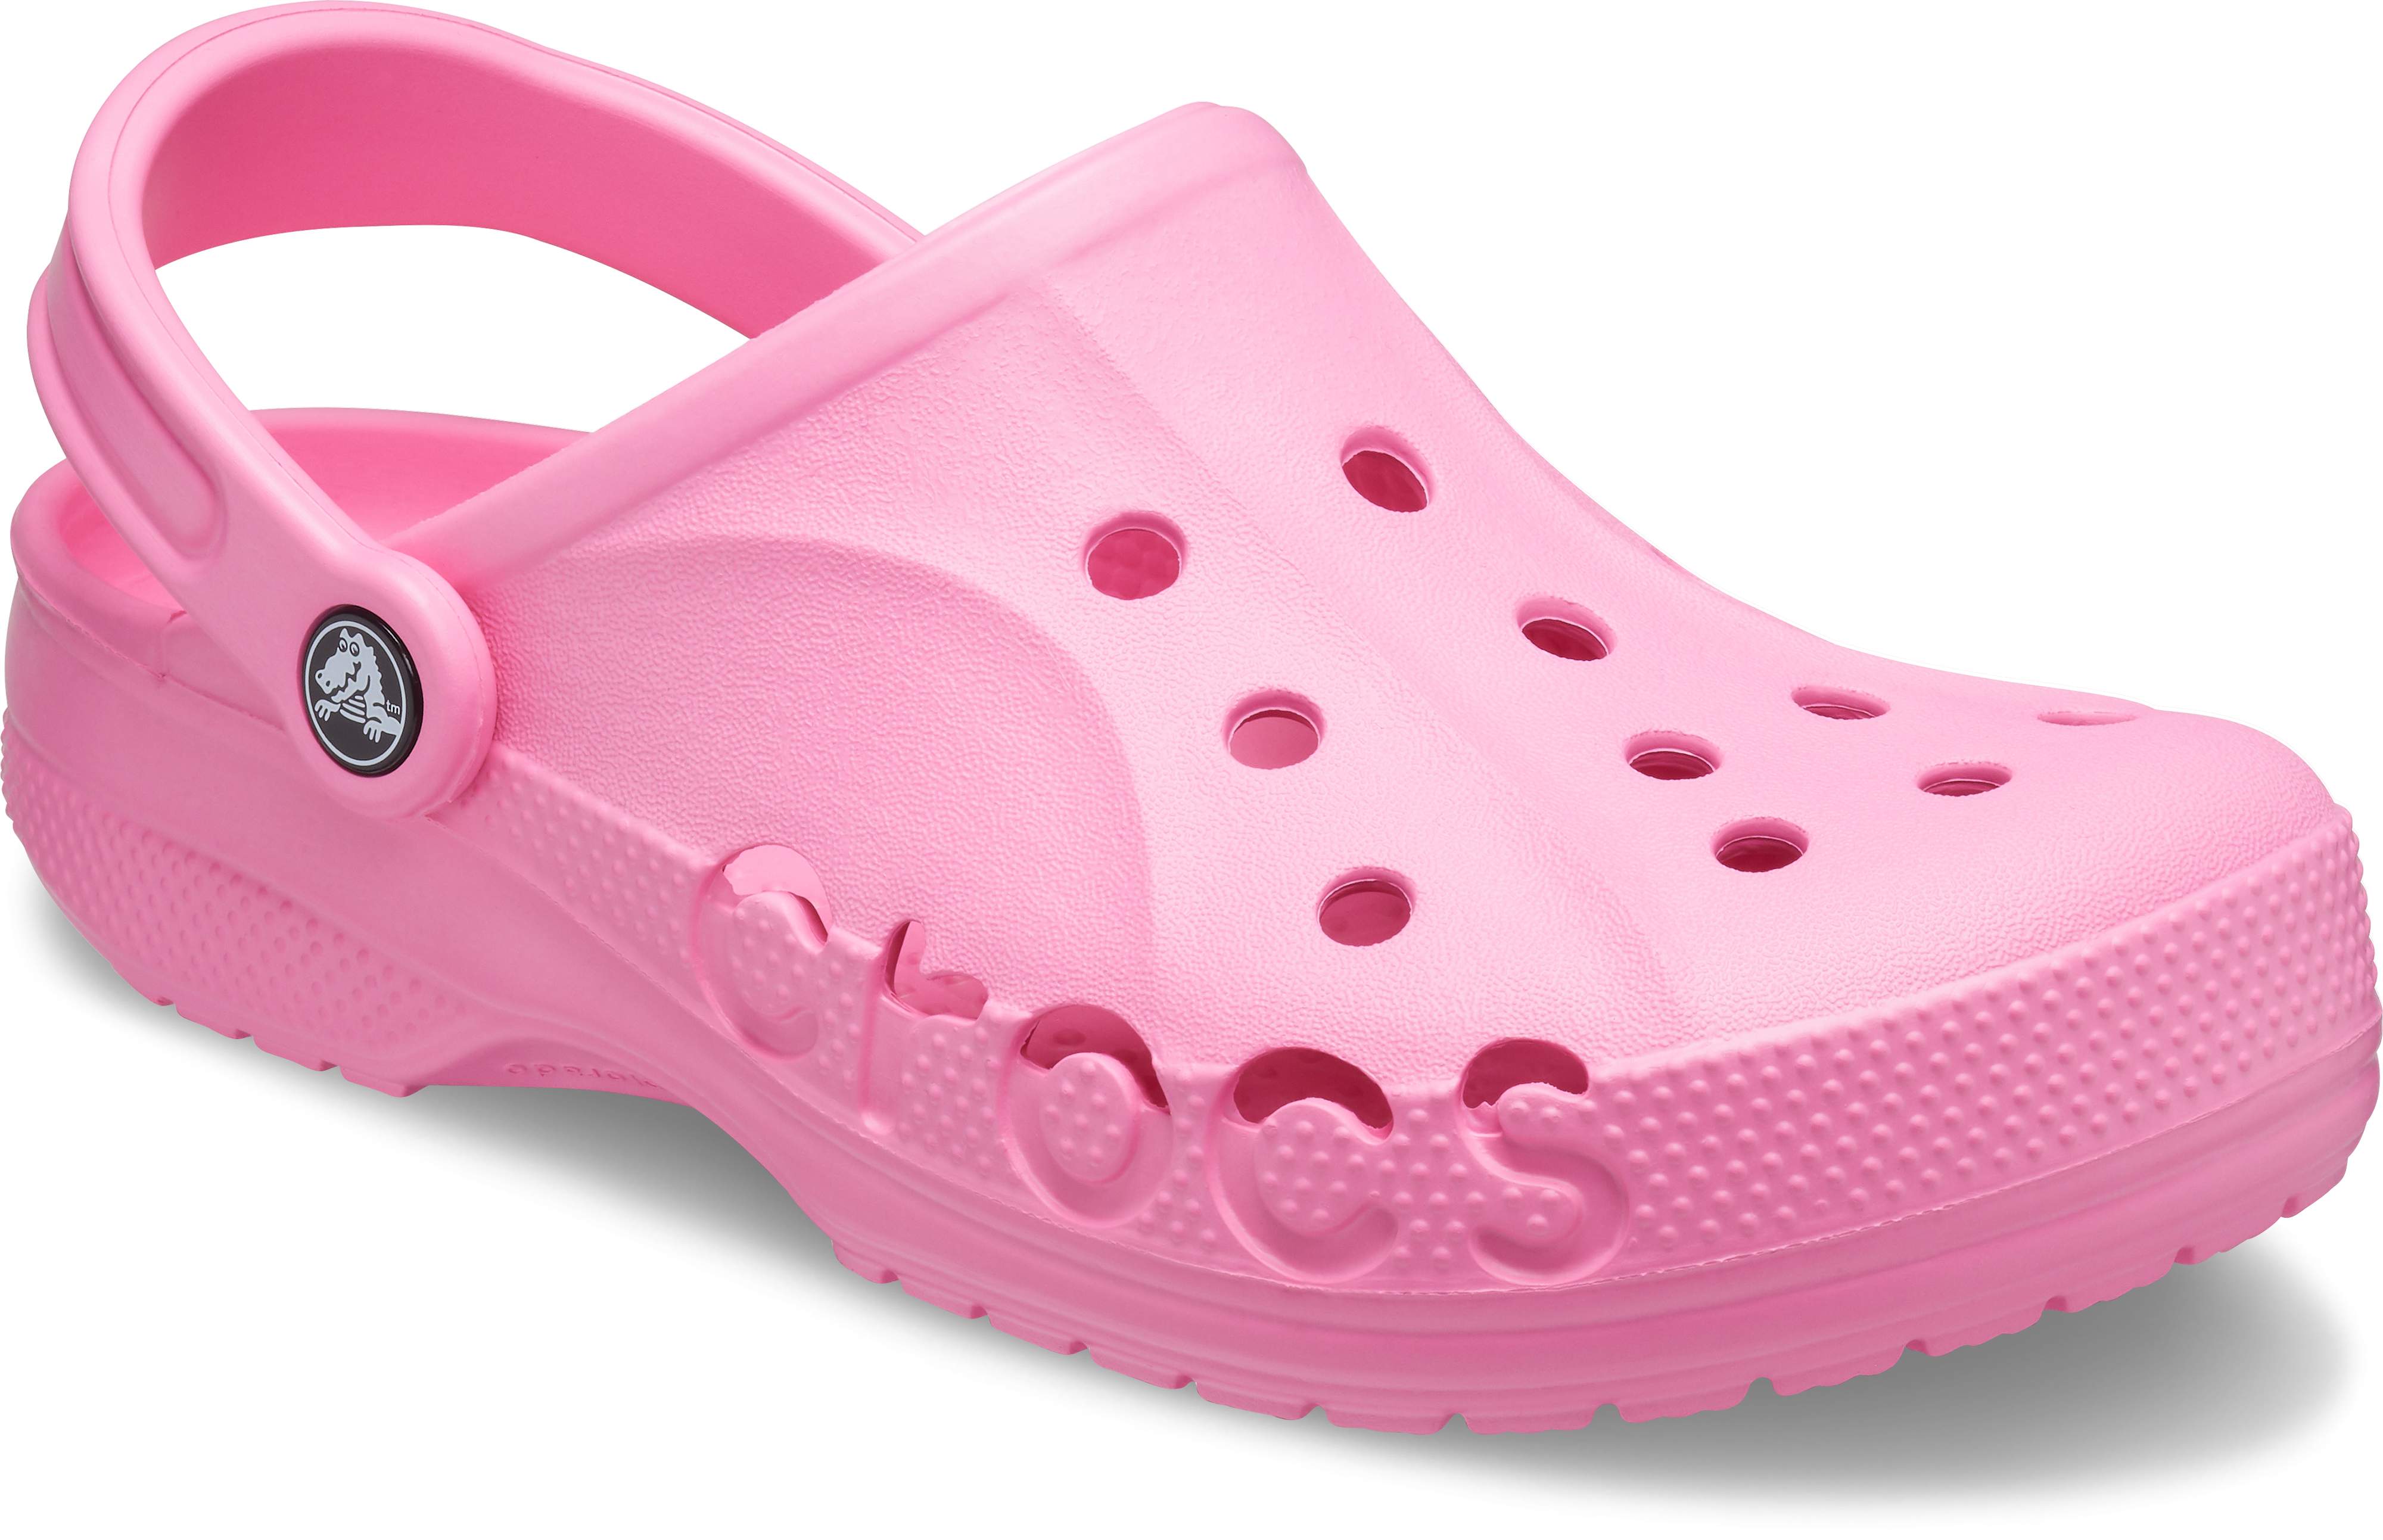 baby crocs uk